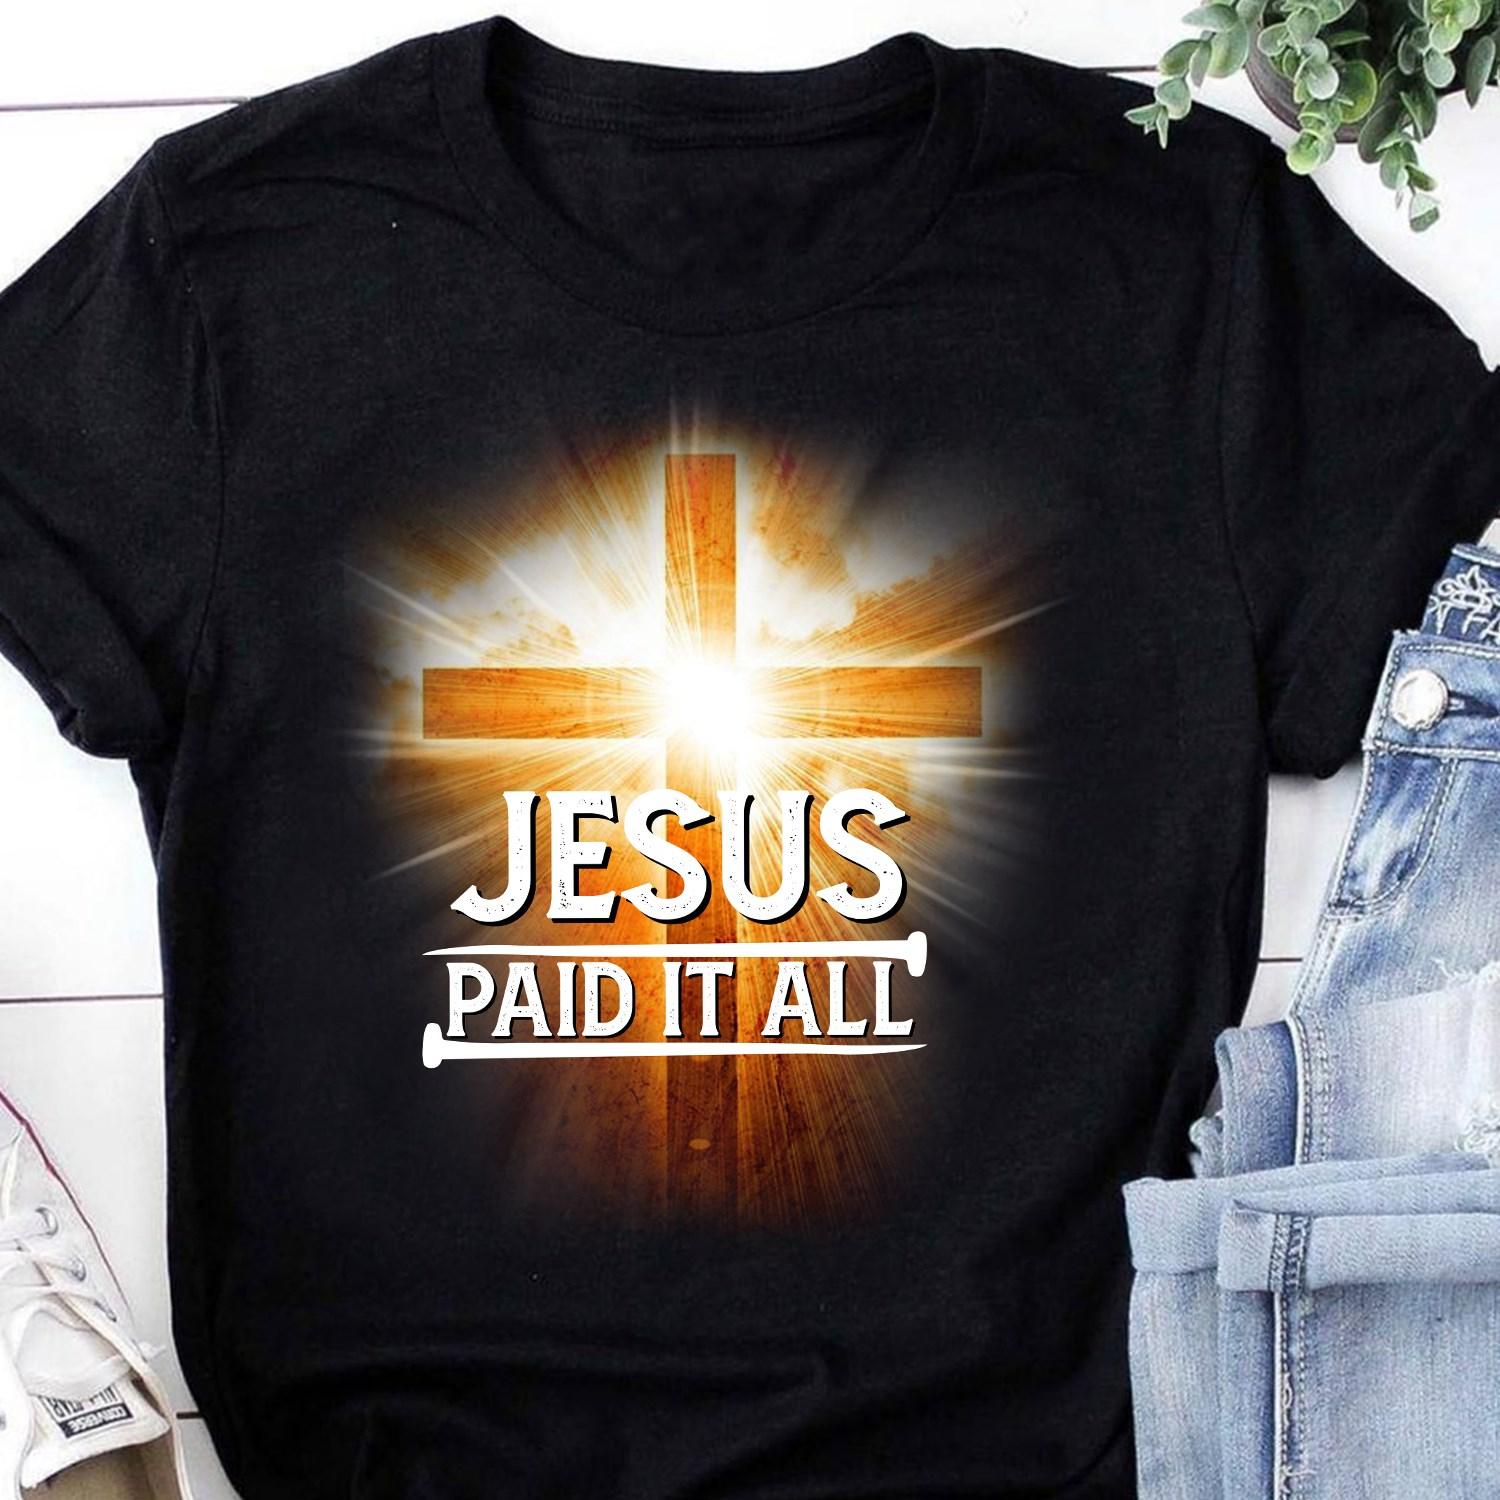 Jesus paid it all - Jesus the god, Believe in Jesus